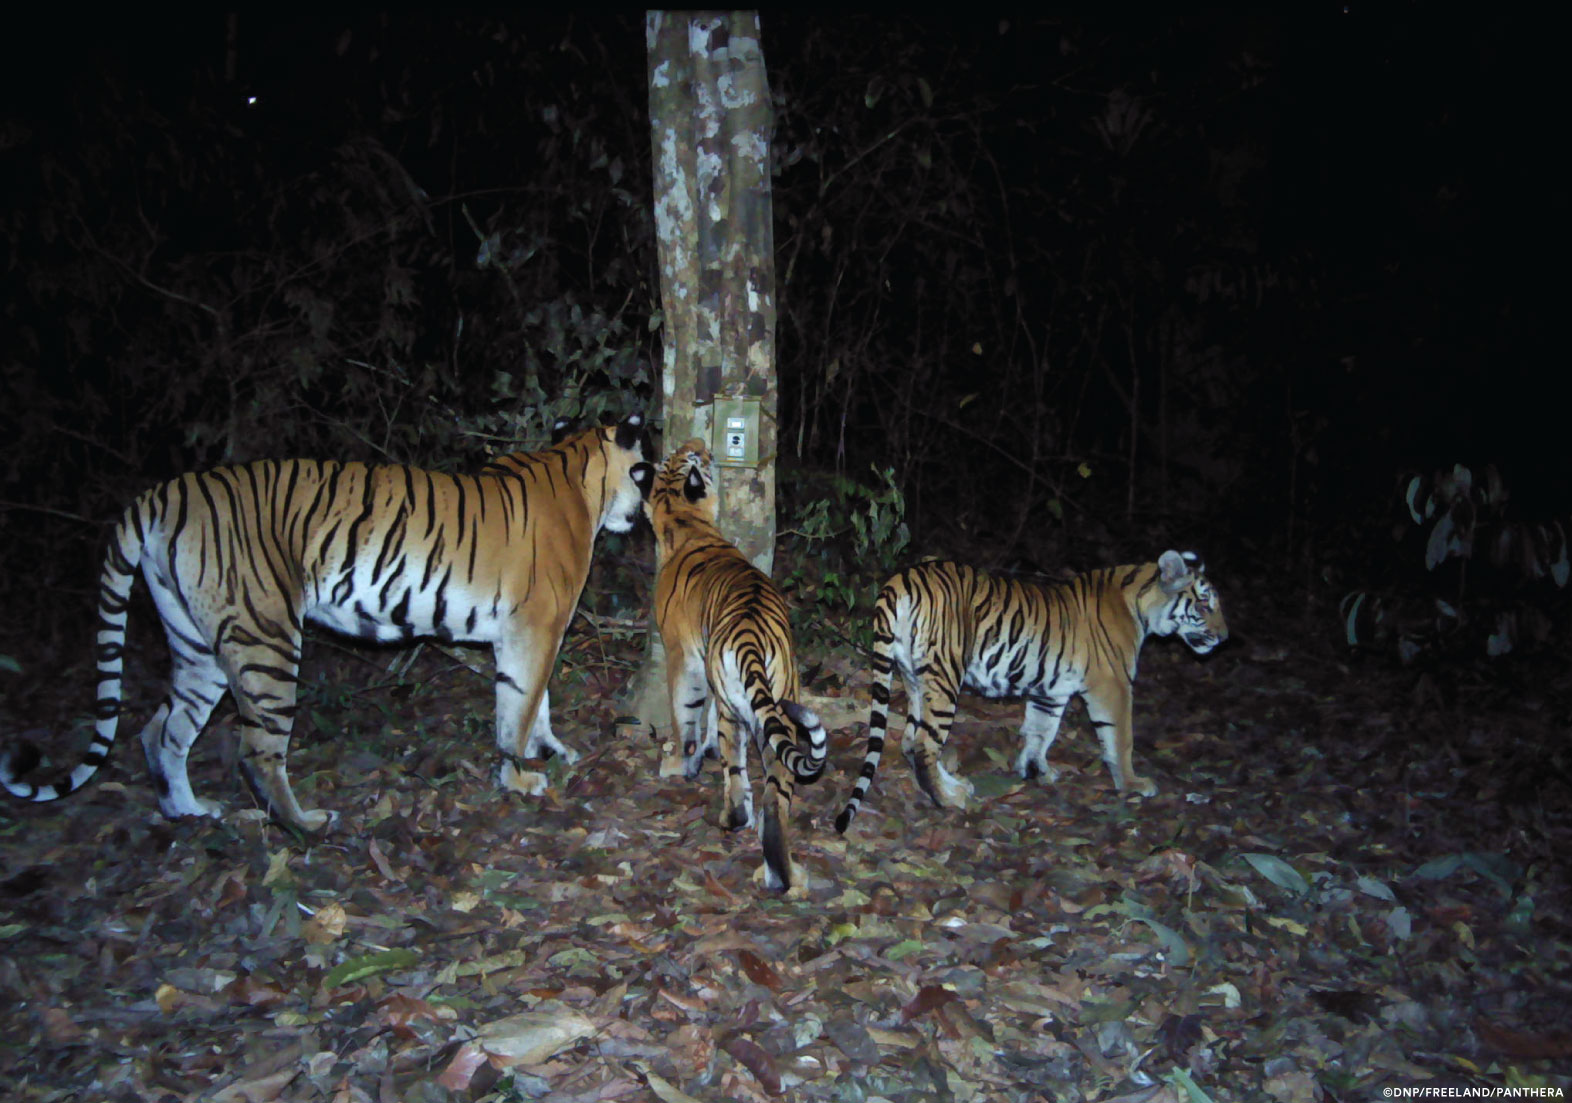 Endangered tiger population in ground-breaking population modelling study